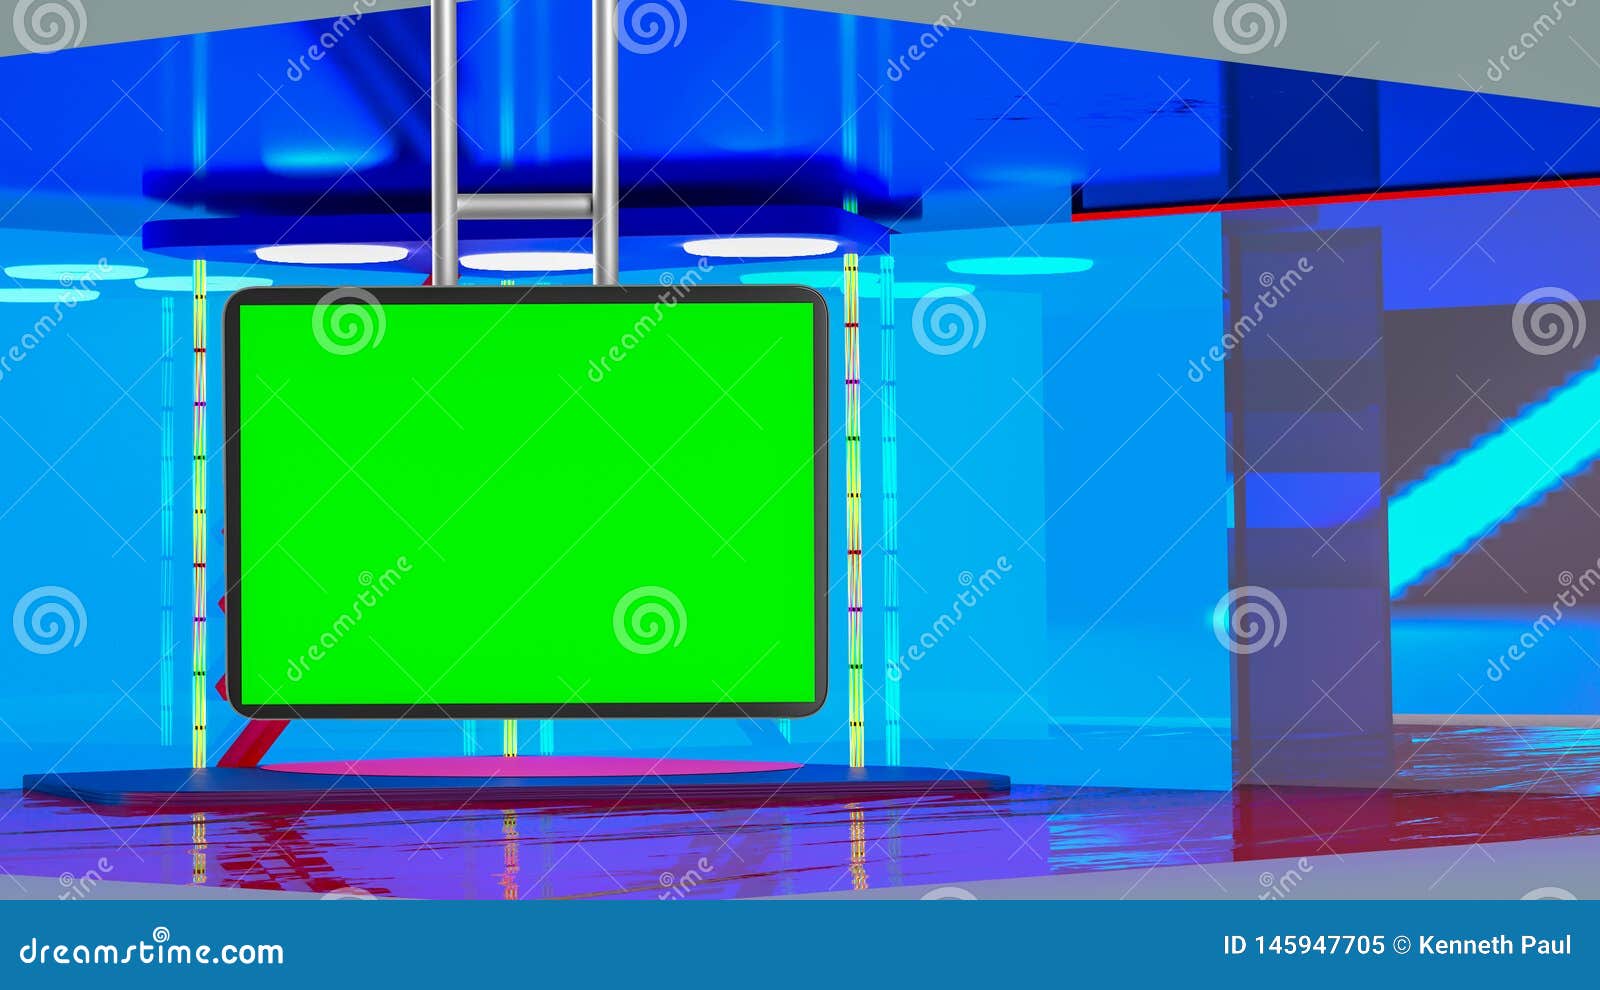 tv studio set background